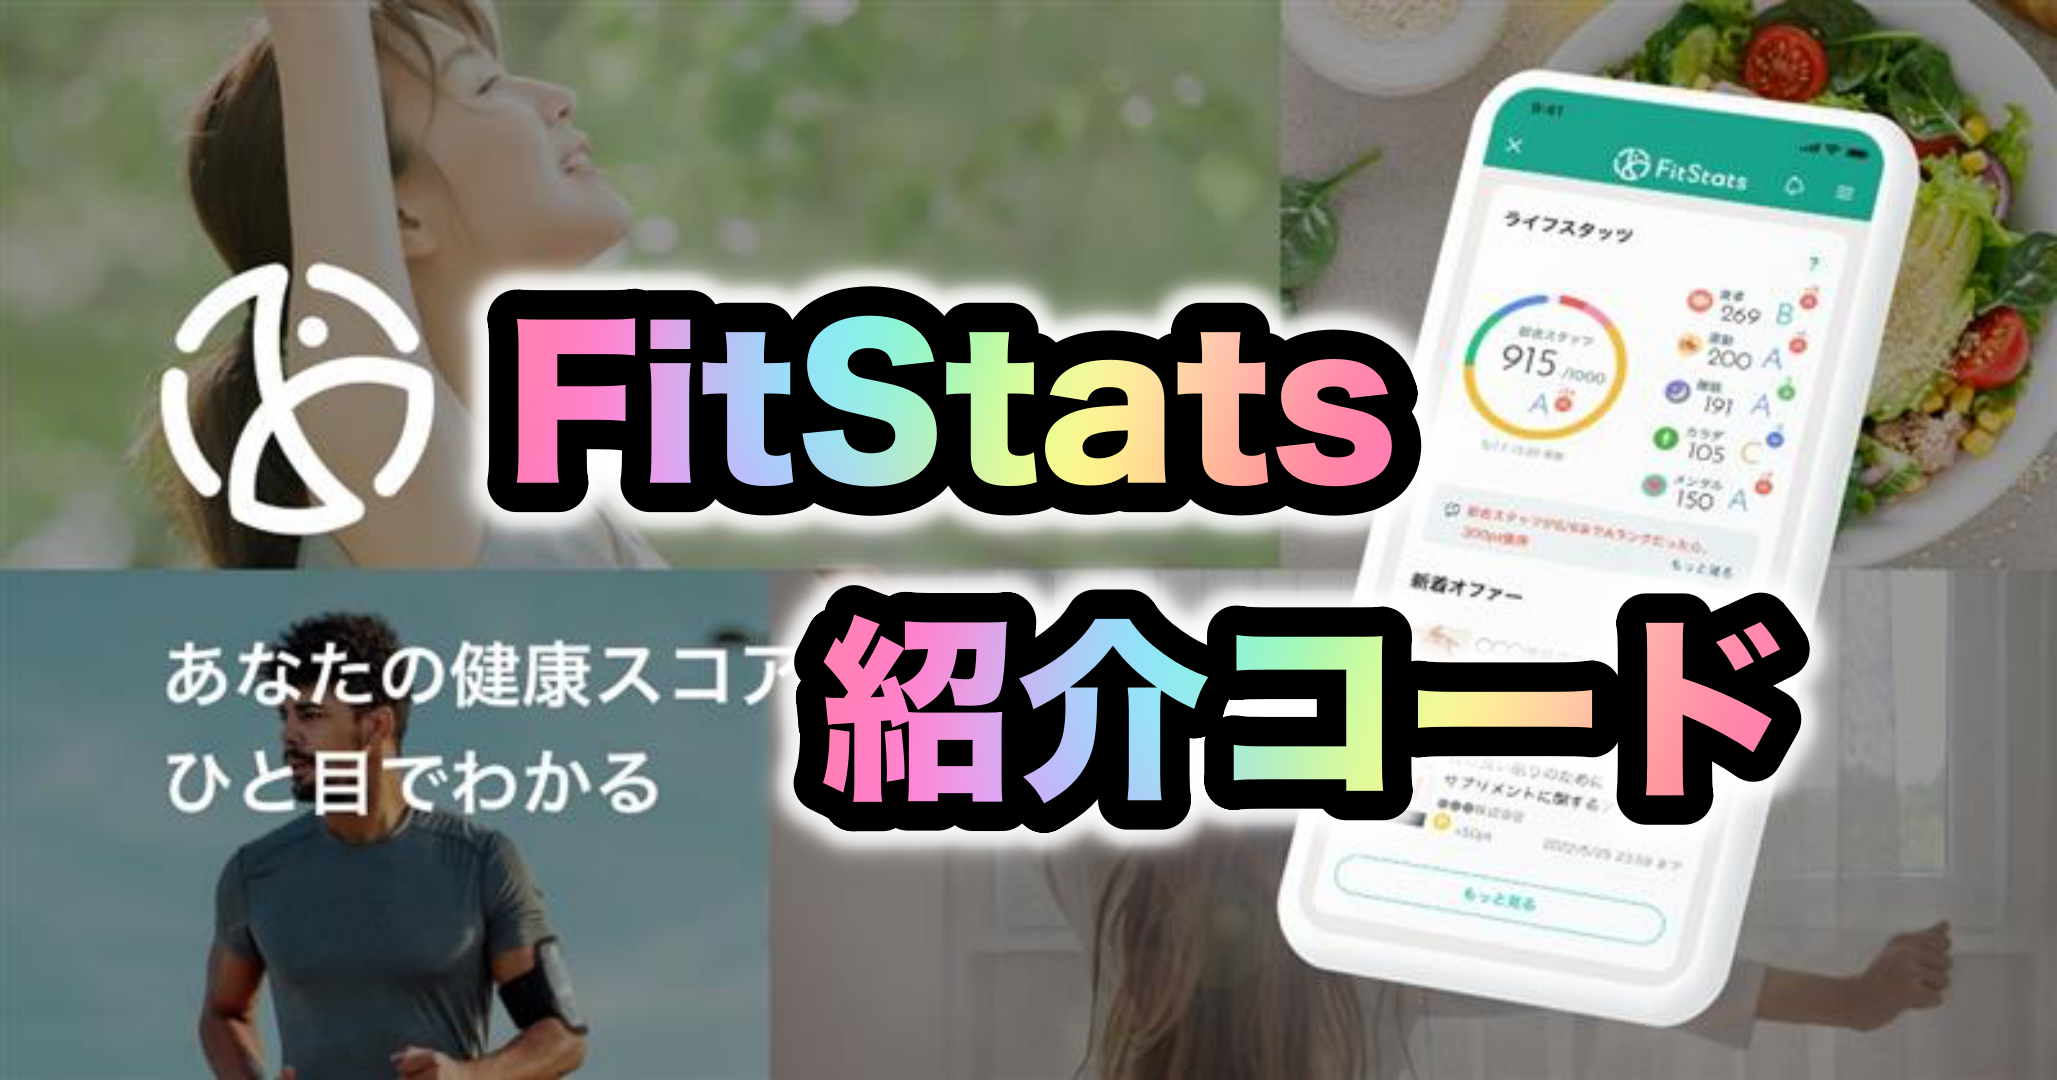 FitStats紹介コード